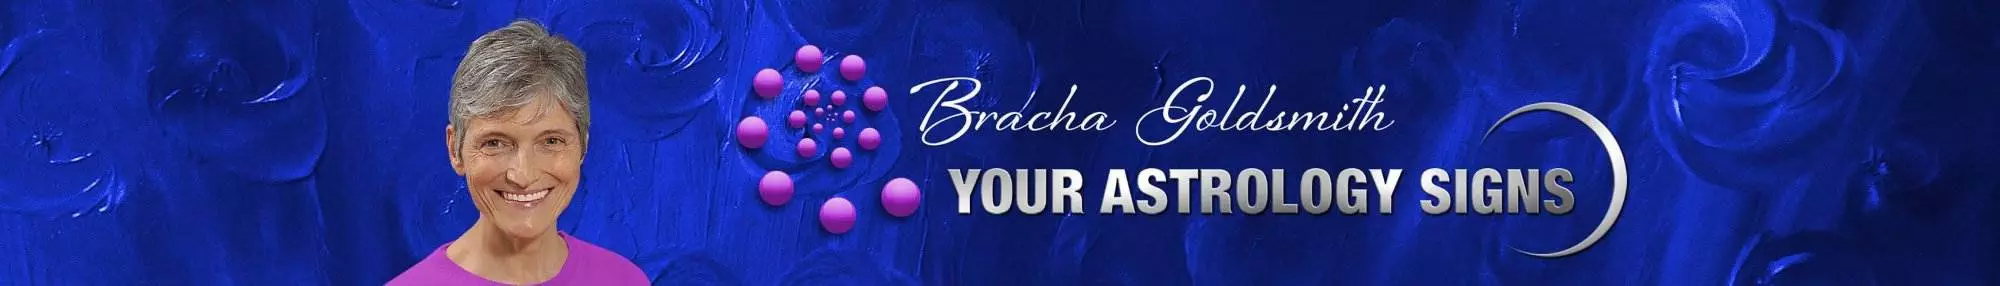 Bracha Goldsmith Your Astrology Signs